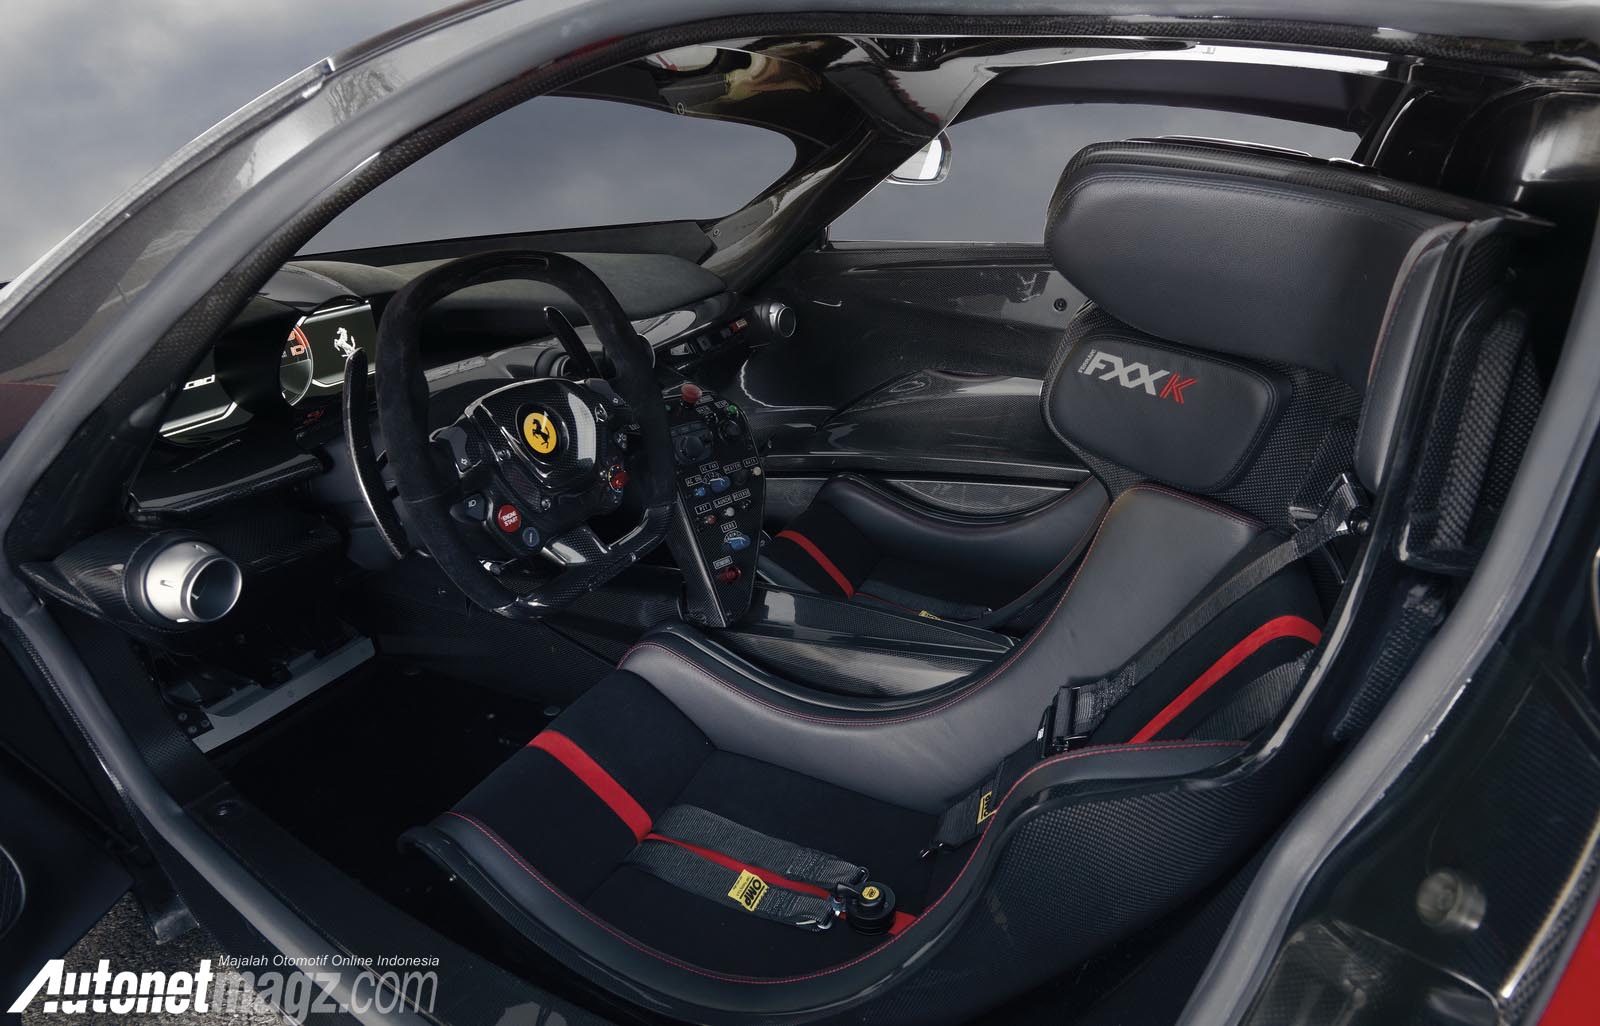 Berita, Ferrari FXX K interior: Hanya Dibuat 40 unit, Dubai Kebagian 2 Ferrari FXX K!